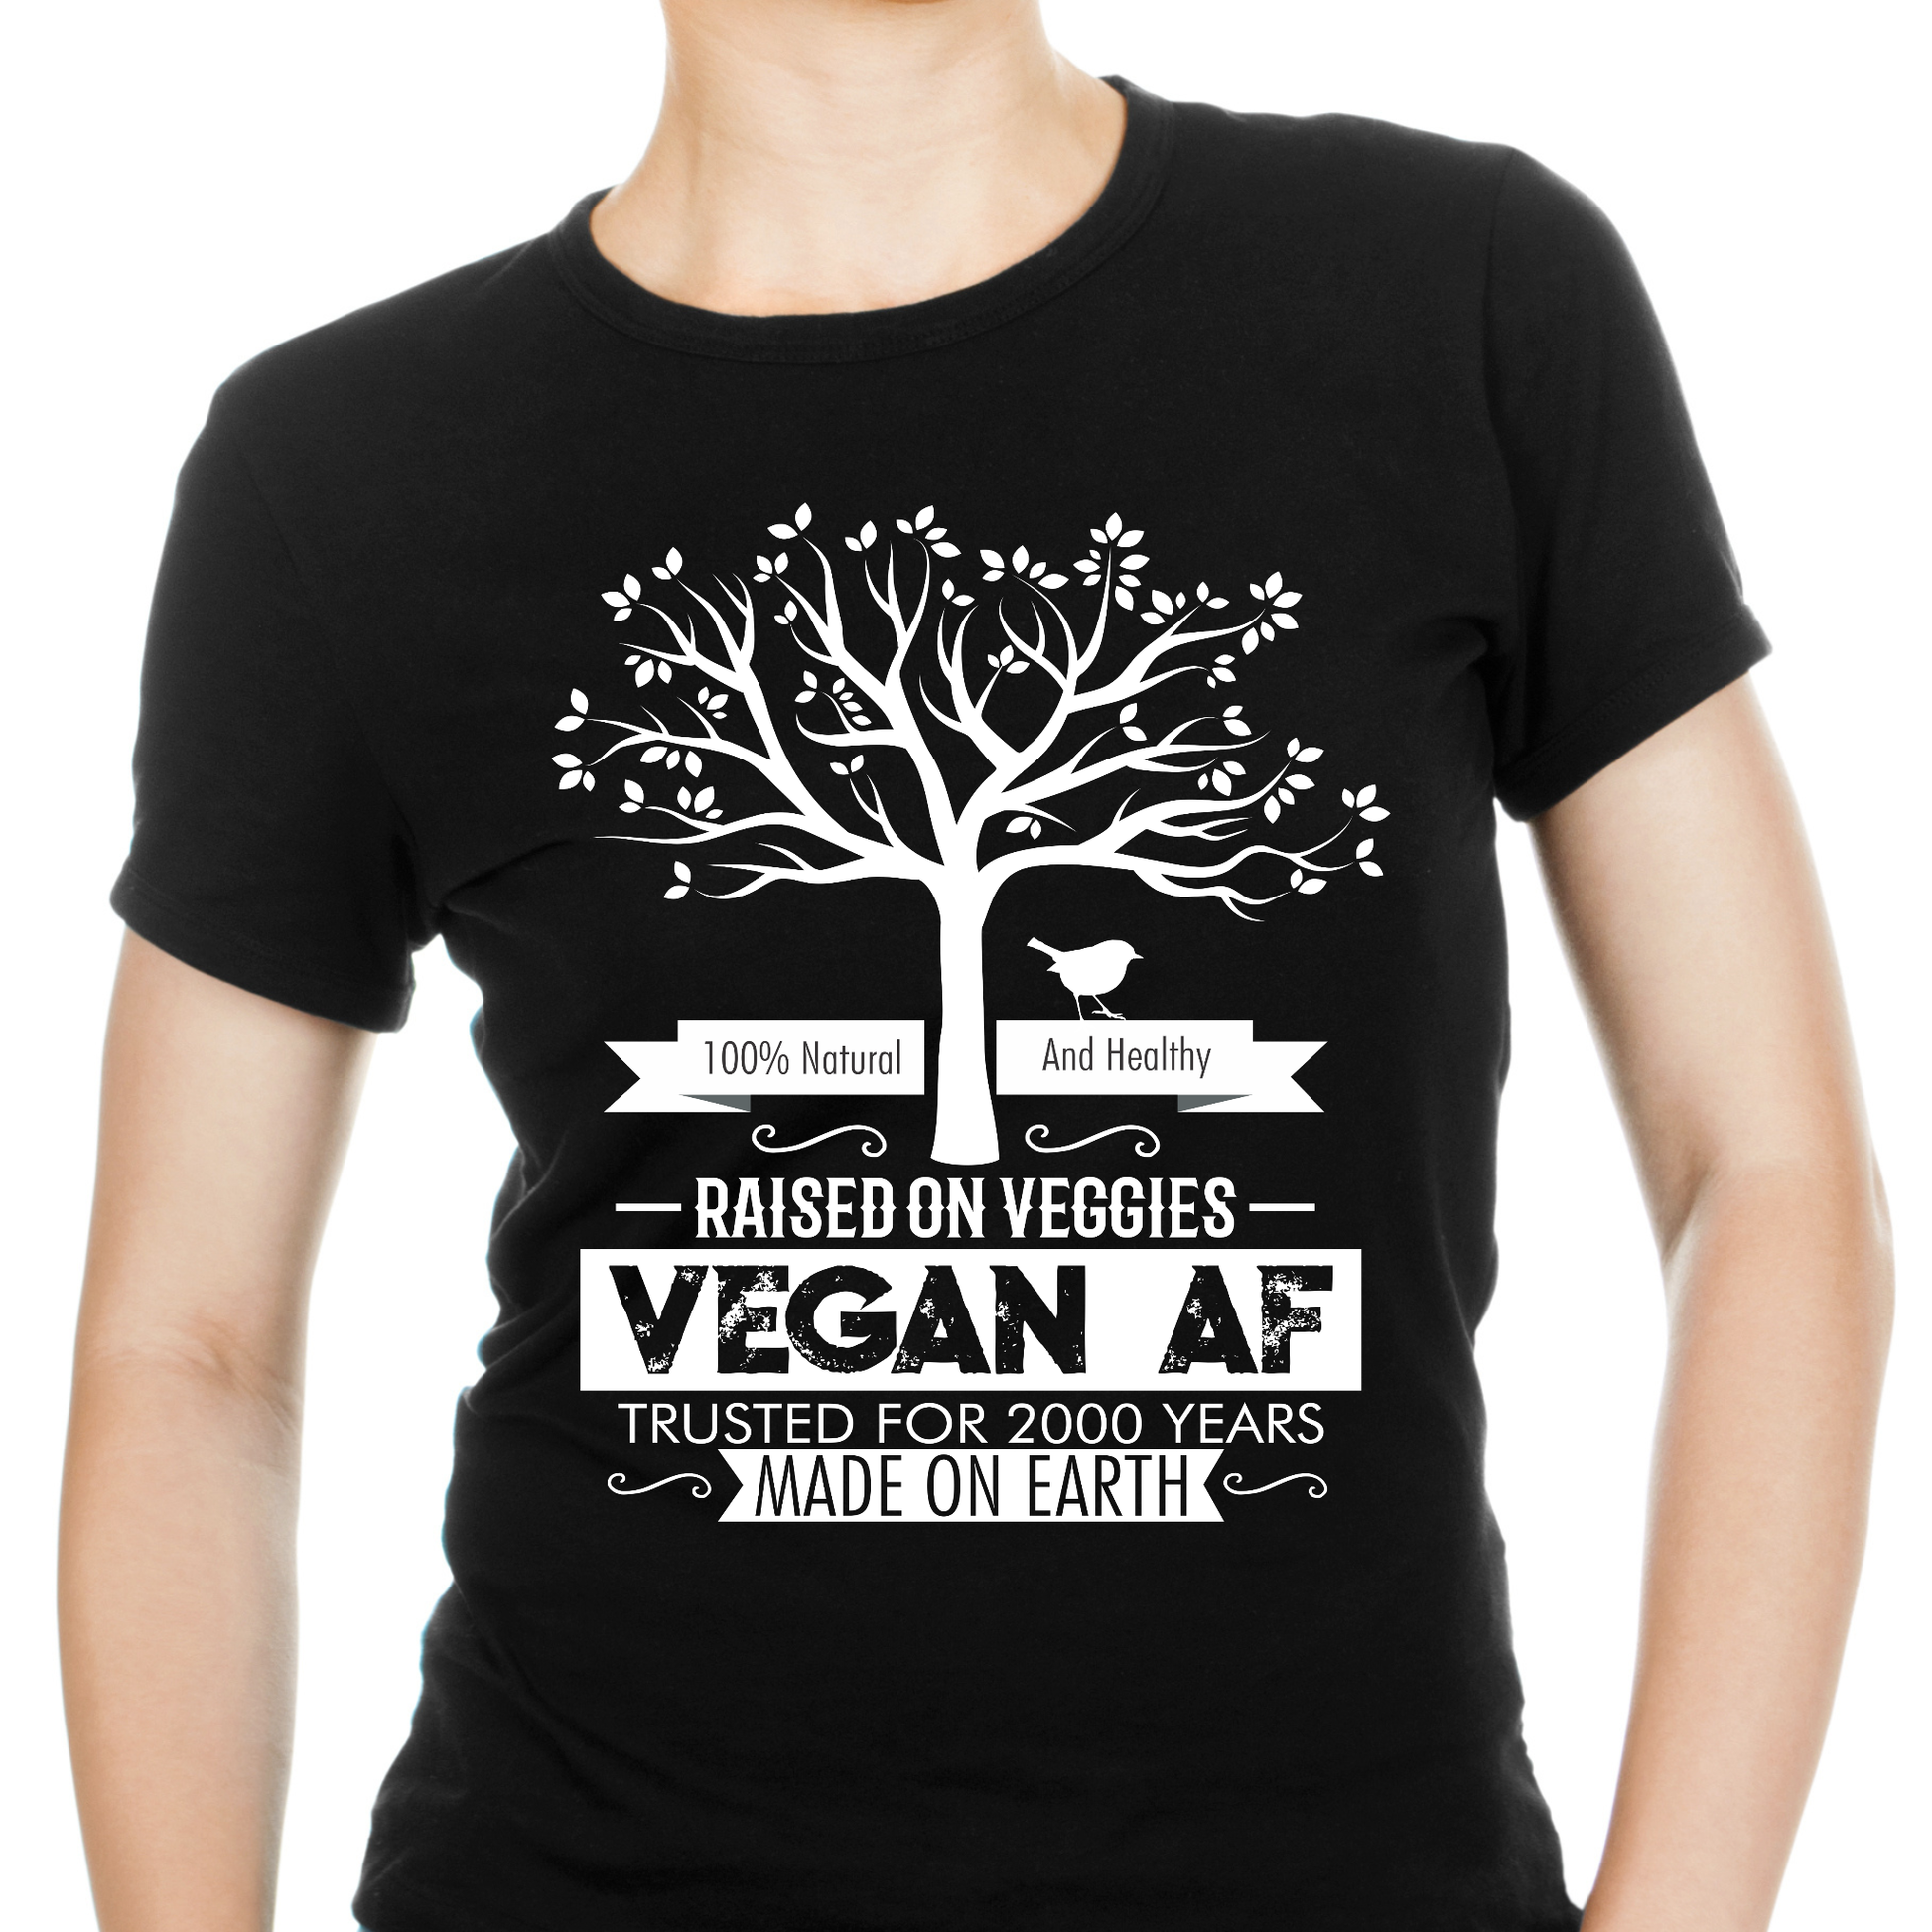 Raised on veggies vegan af made on earth Women's Vegan t-shirt - Premium t-shirt from Lees Krazy Teez - Just $19.95! Shop now at Lees Krazy Teez